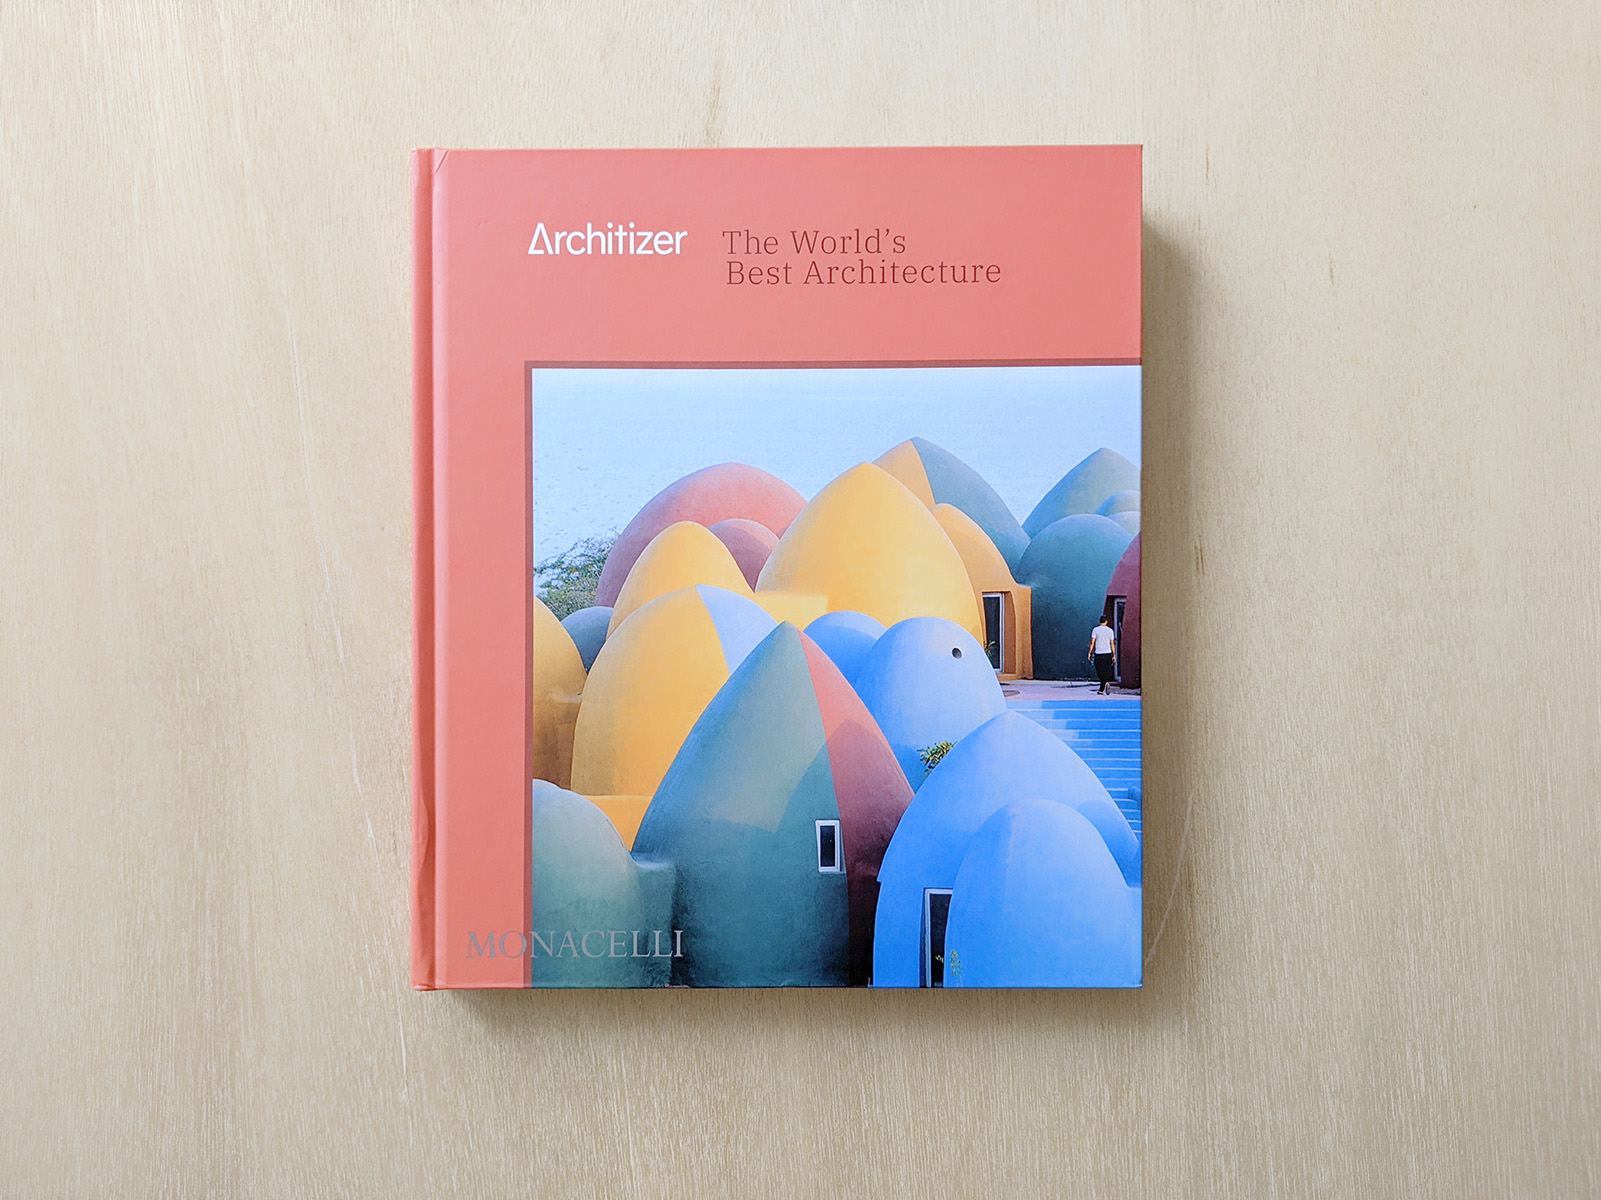 Architizer: The World's Best Architecture